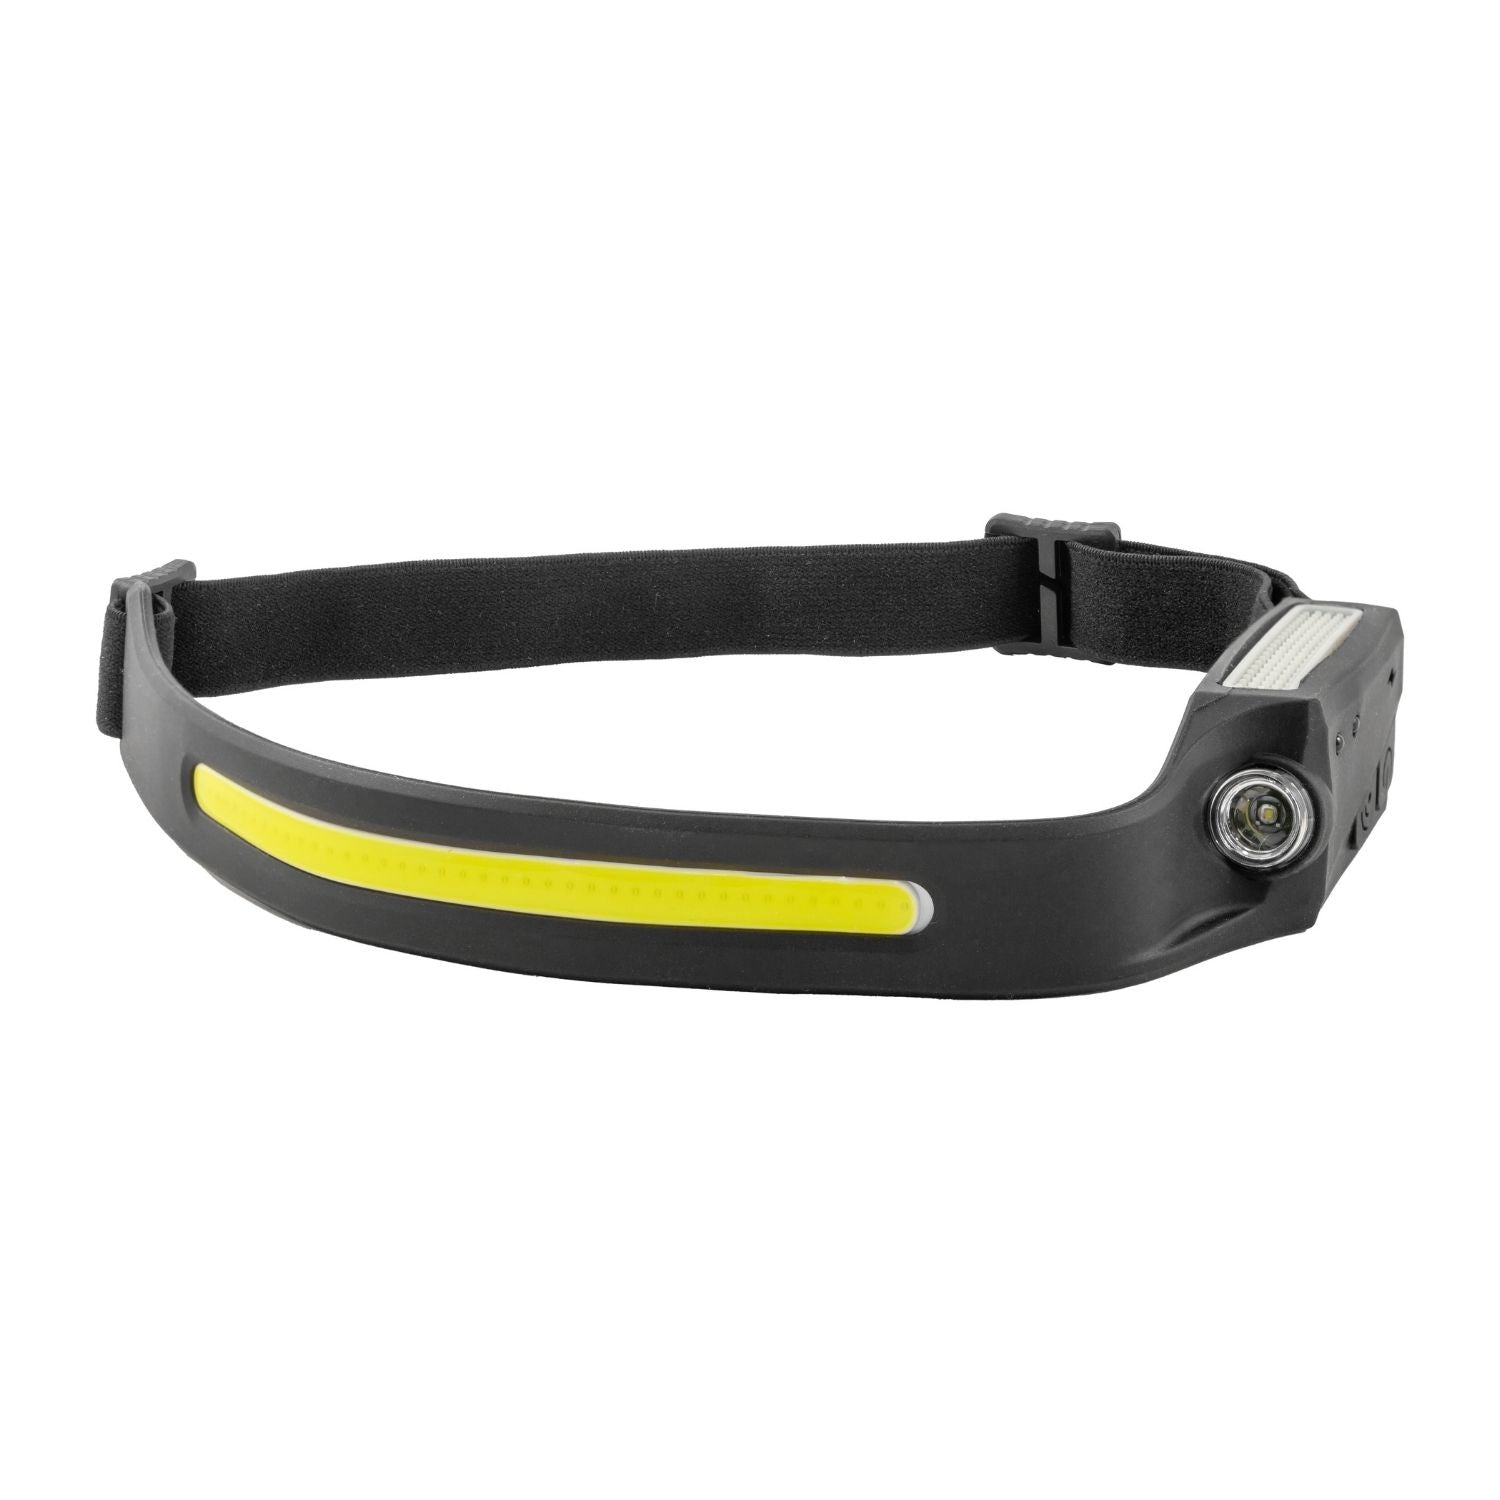 KILIROO 2PCS LED Rechargeable Headlamp with Motion Sensor (Black and Yellow)